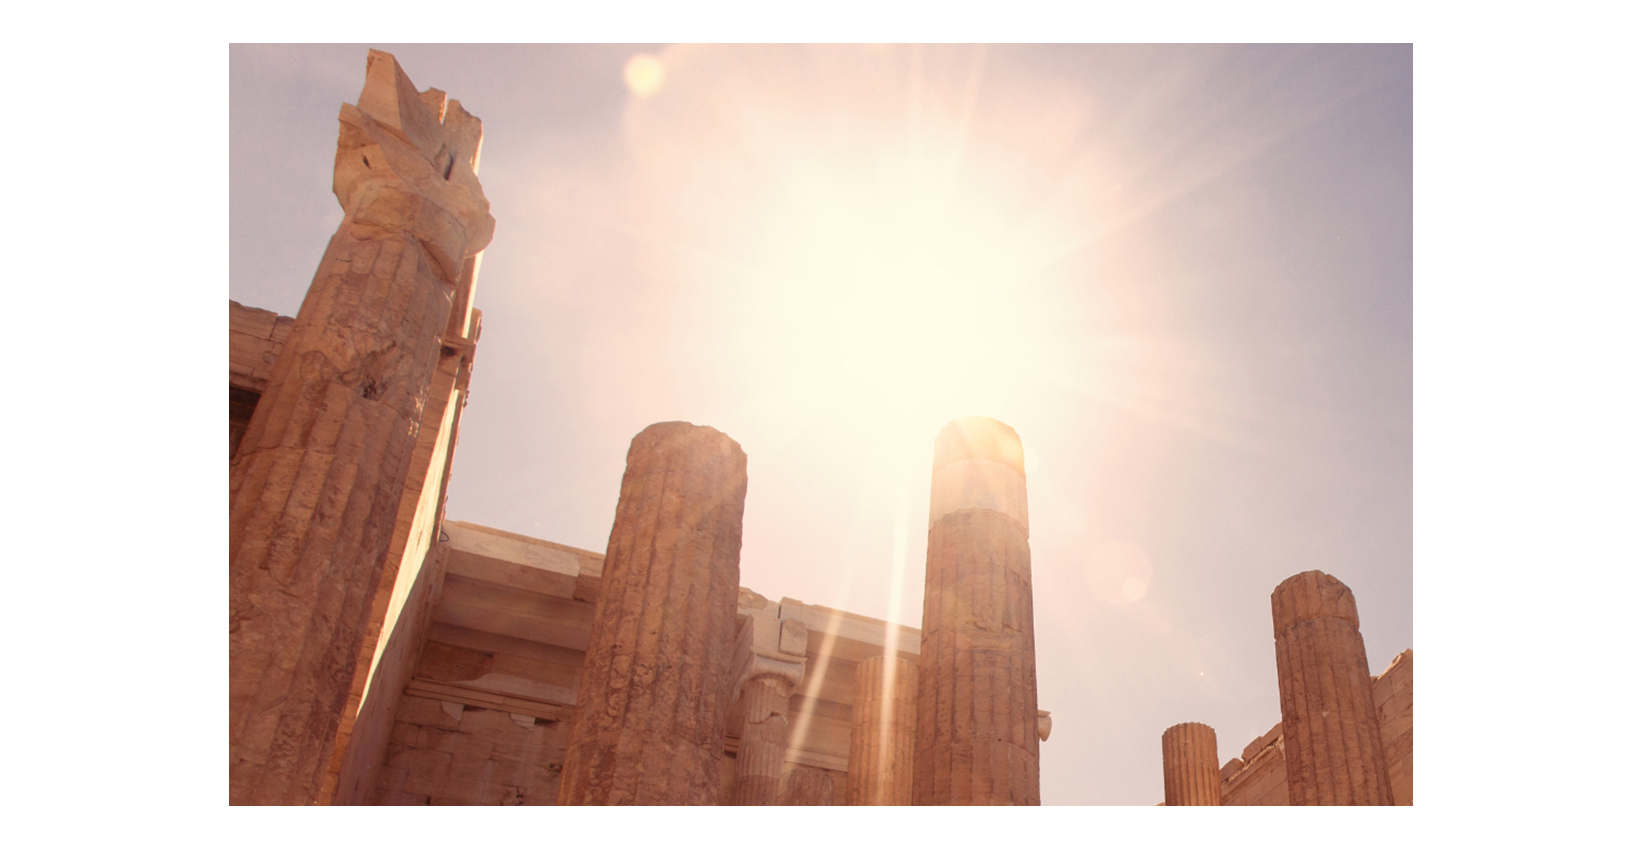 Sun beaming through an ancient Greece building